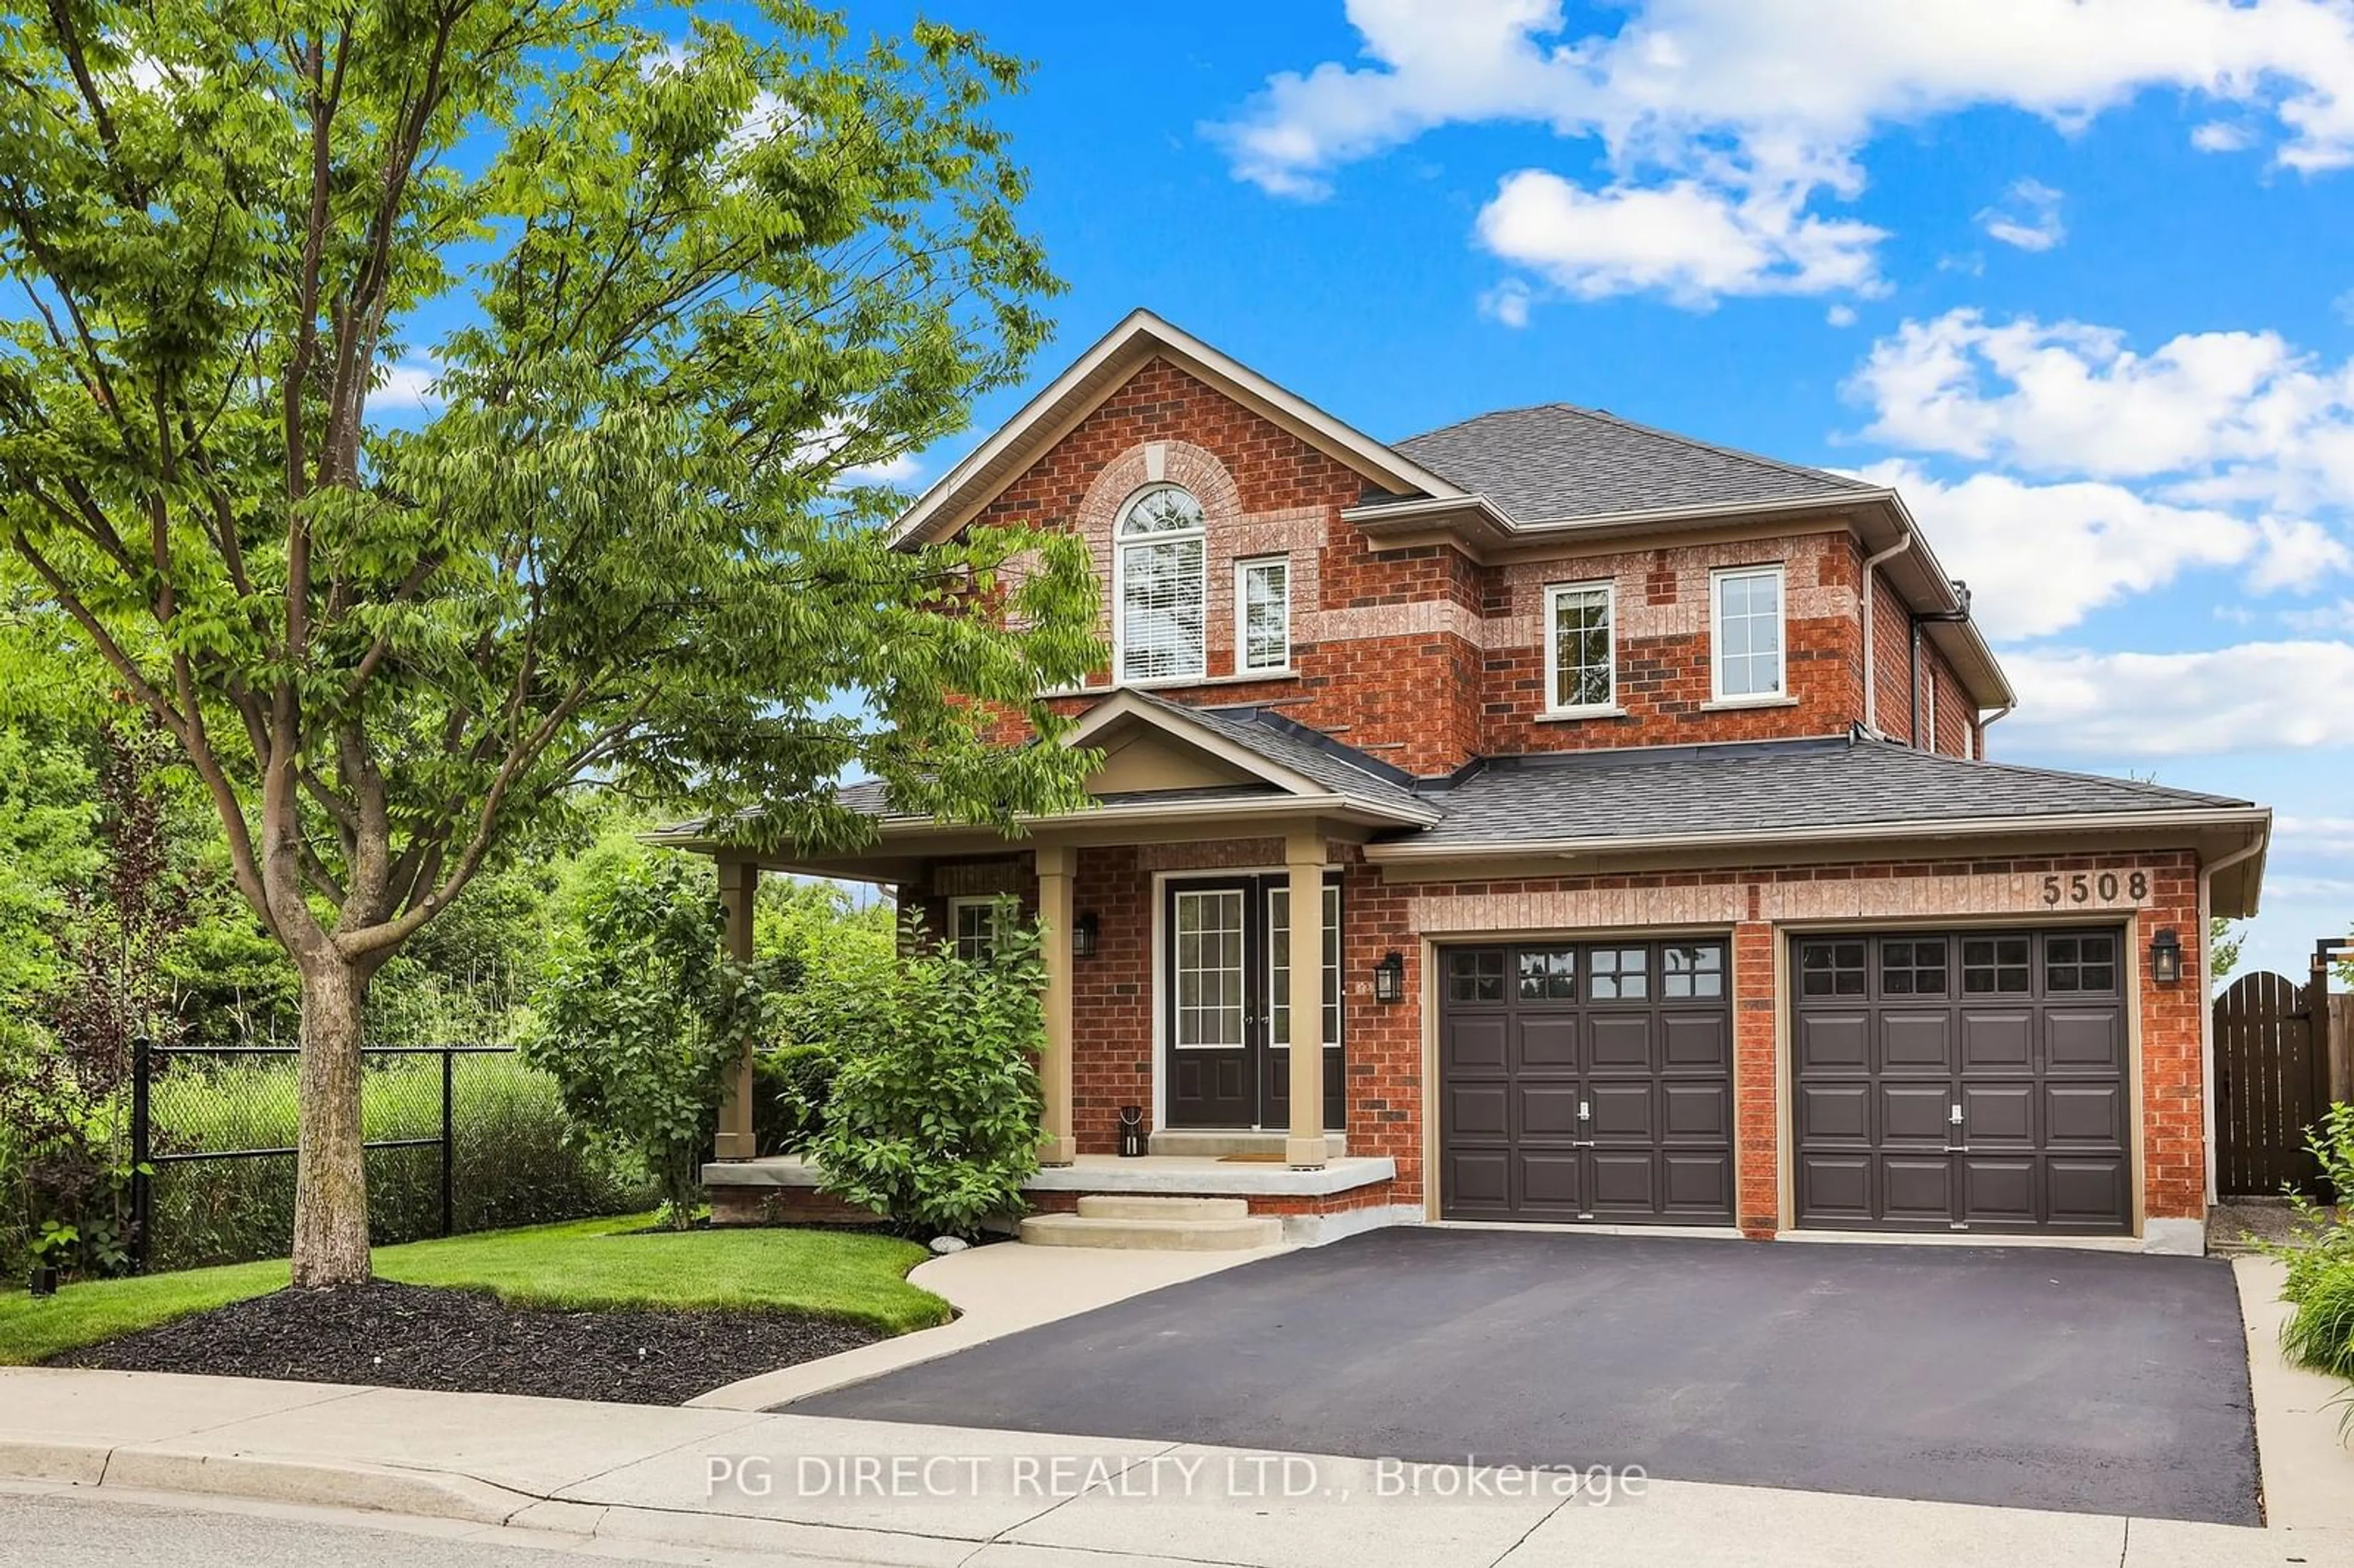 Home with brick exterior material for 5508 Twelve Mile Tr, Burlington Ontario L7L 7L3